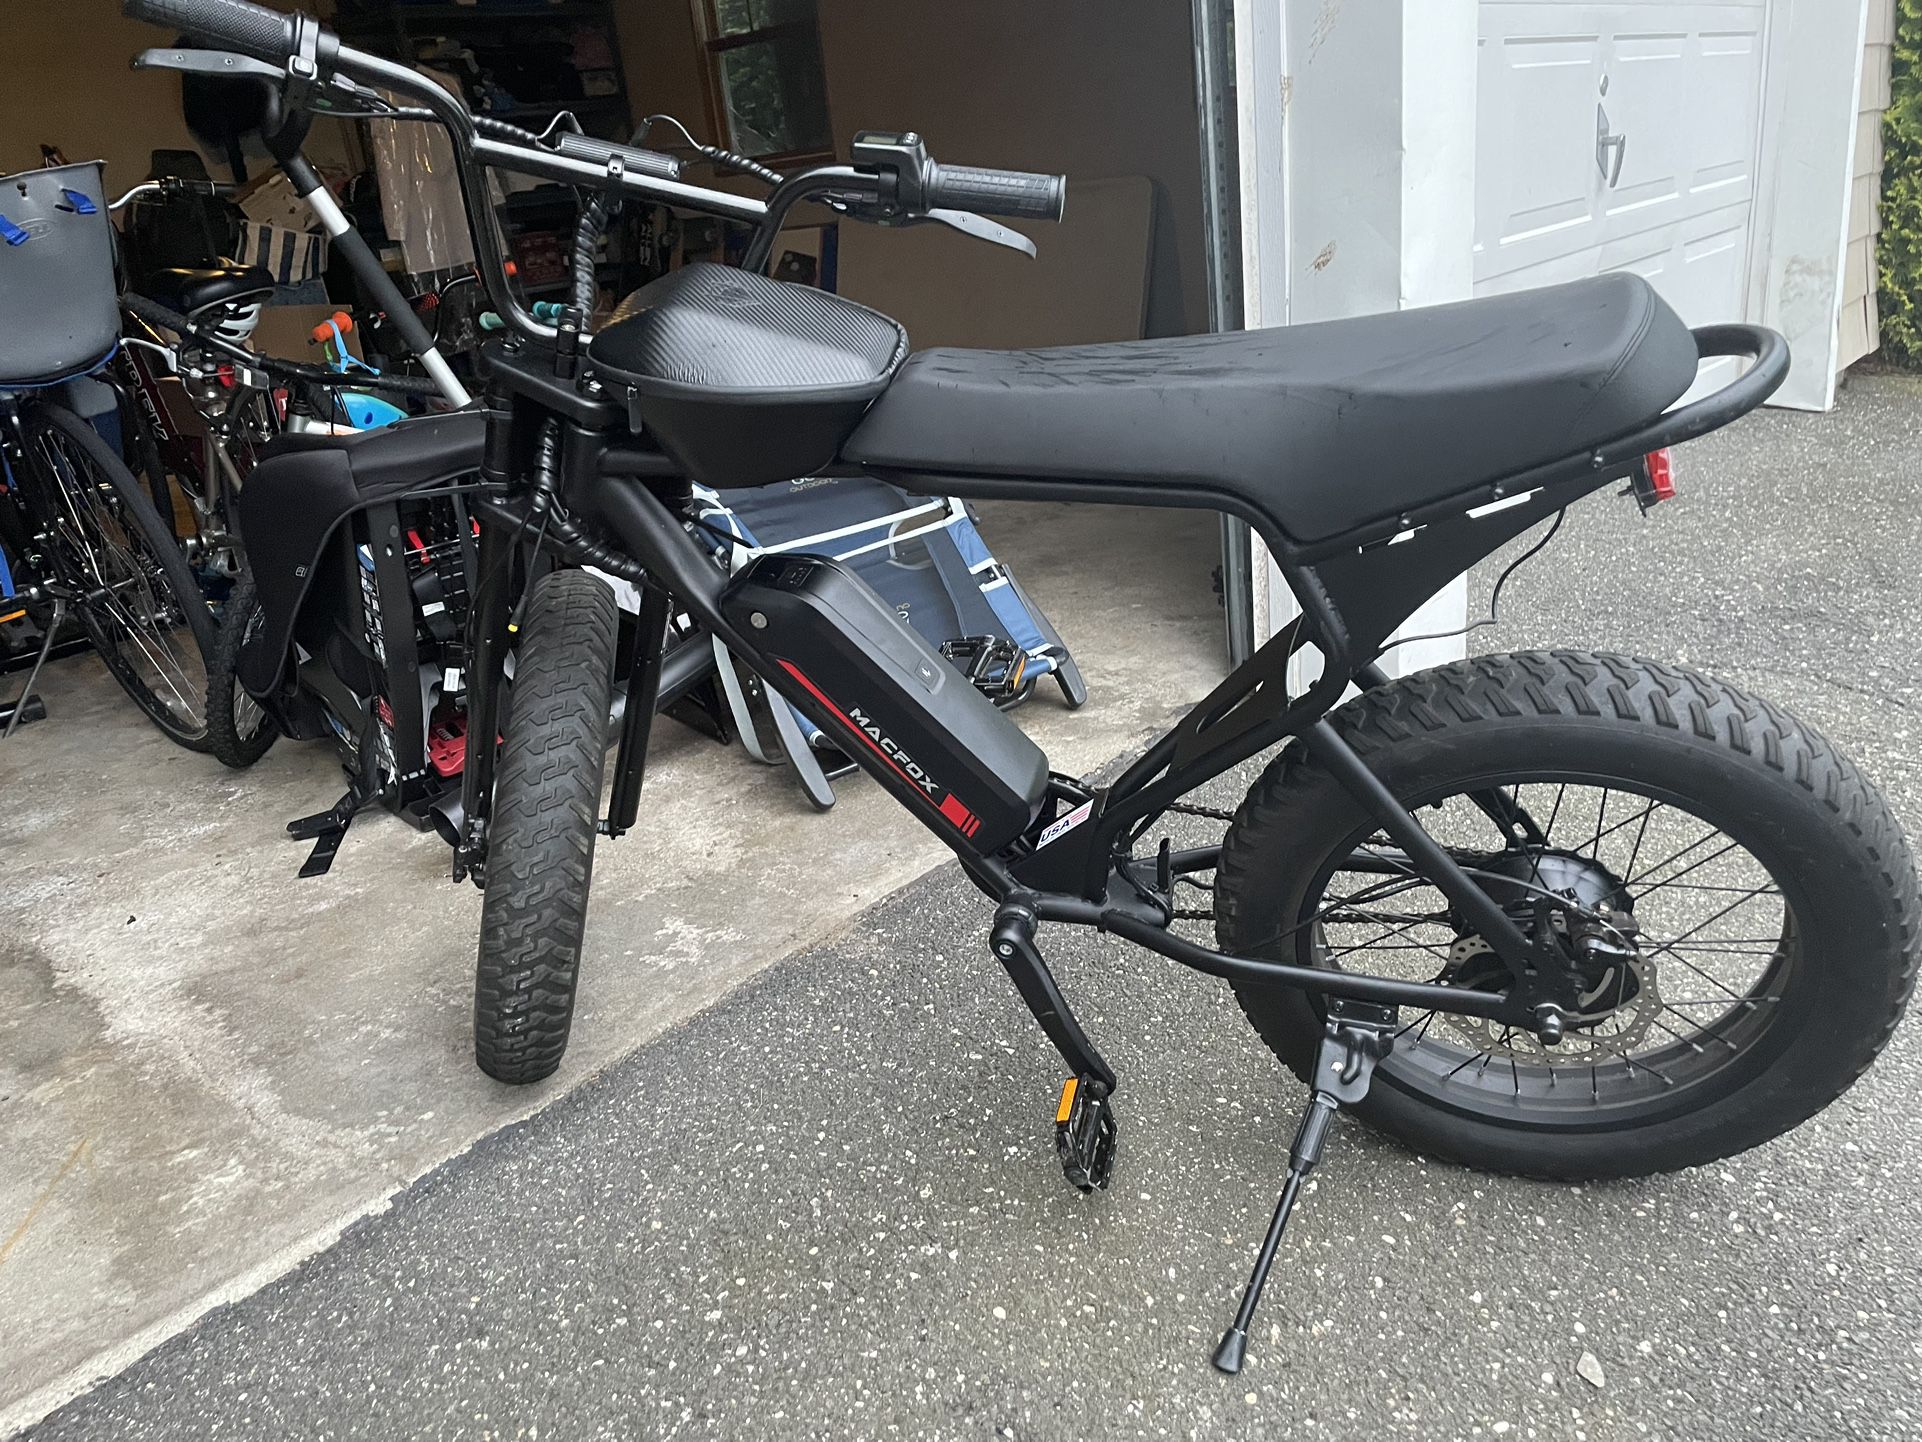 E-bike - Macfox X1 Great Condition 166 Miles